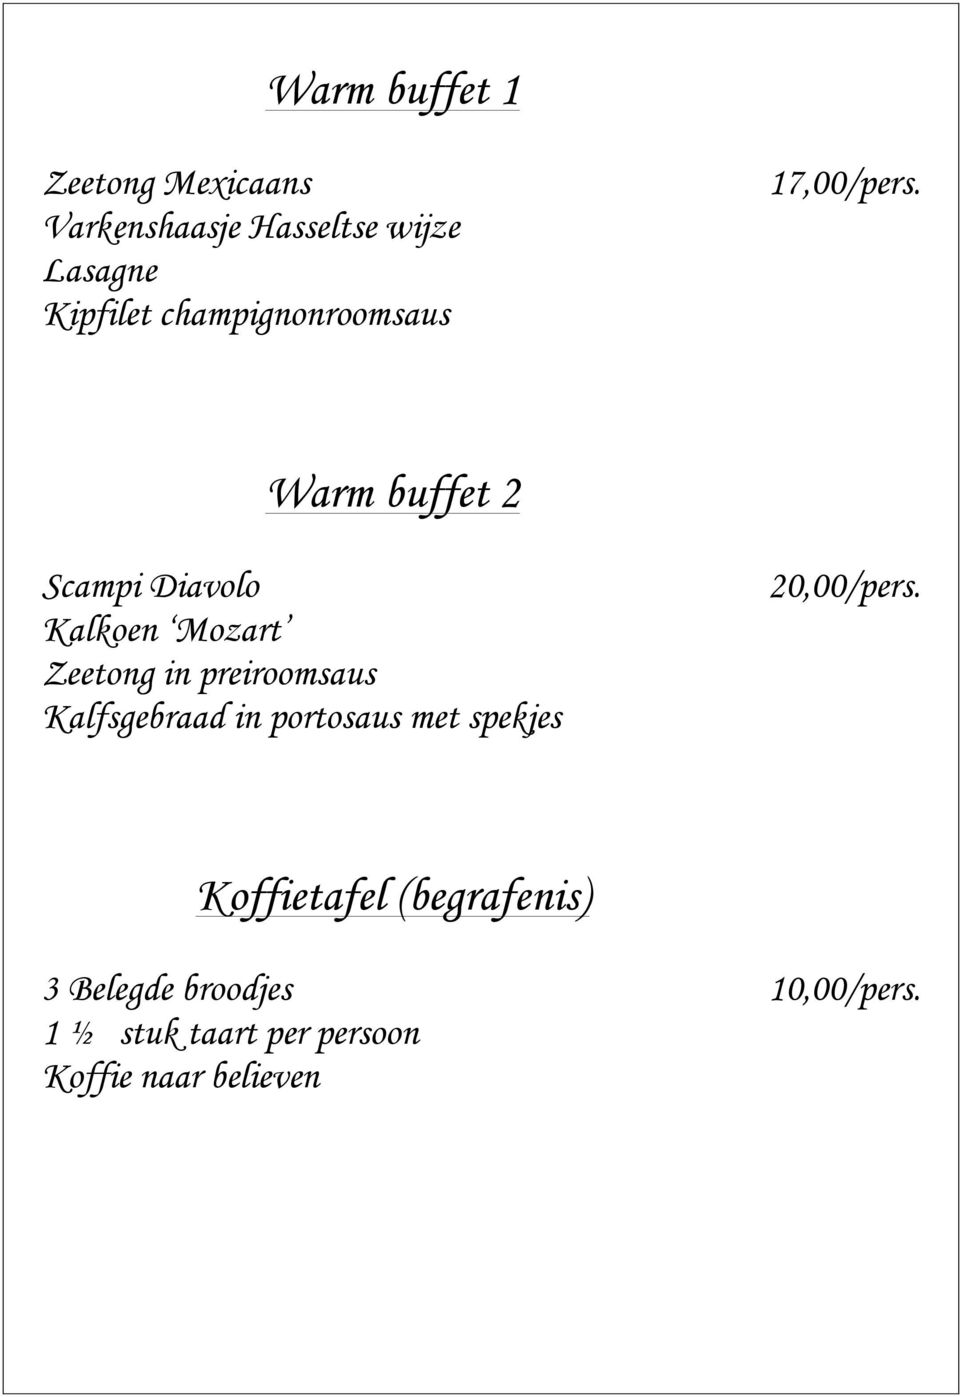 Warm buffet 2 Scampi Diavolo Kalkoen Mozart Zeetong in preiroomsaus Kalfsgebraad